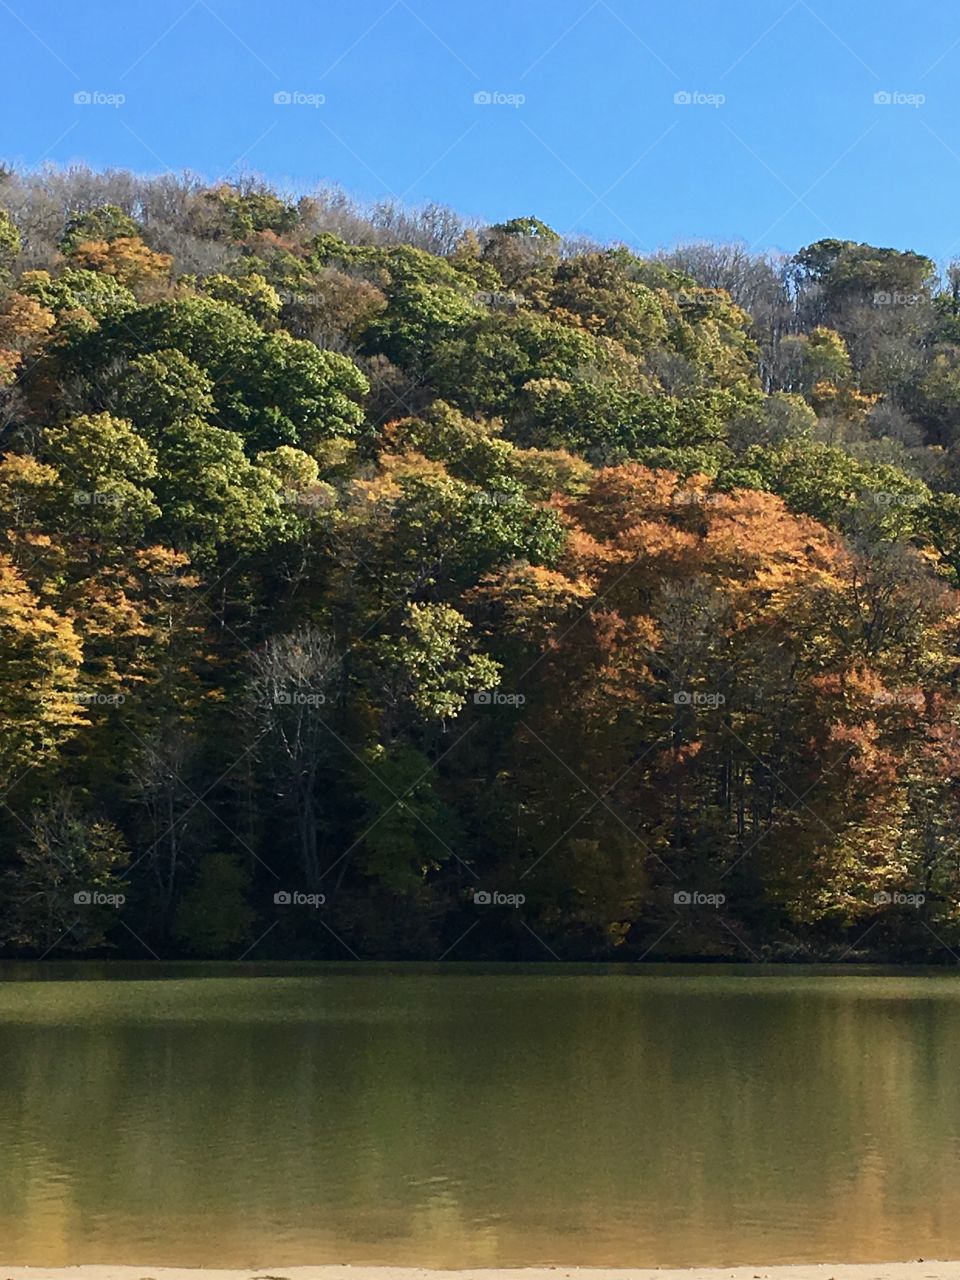 Fall in Pennsylvania 